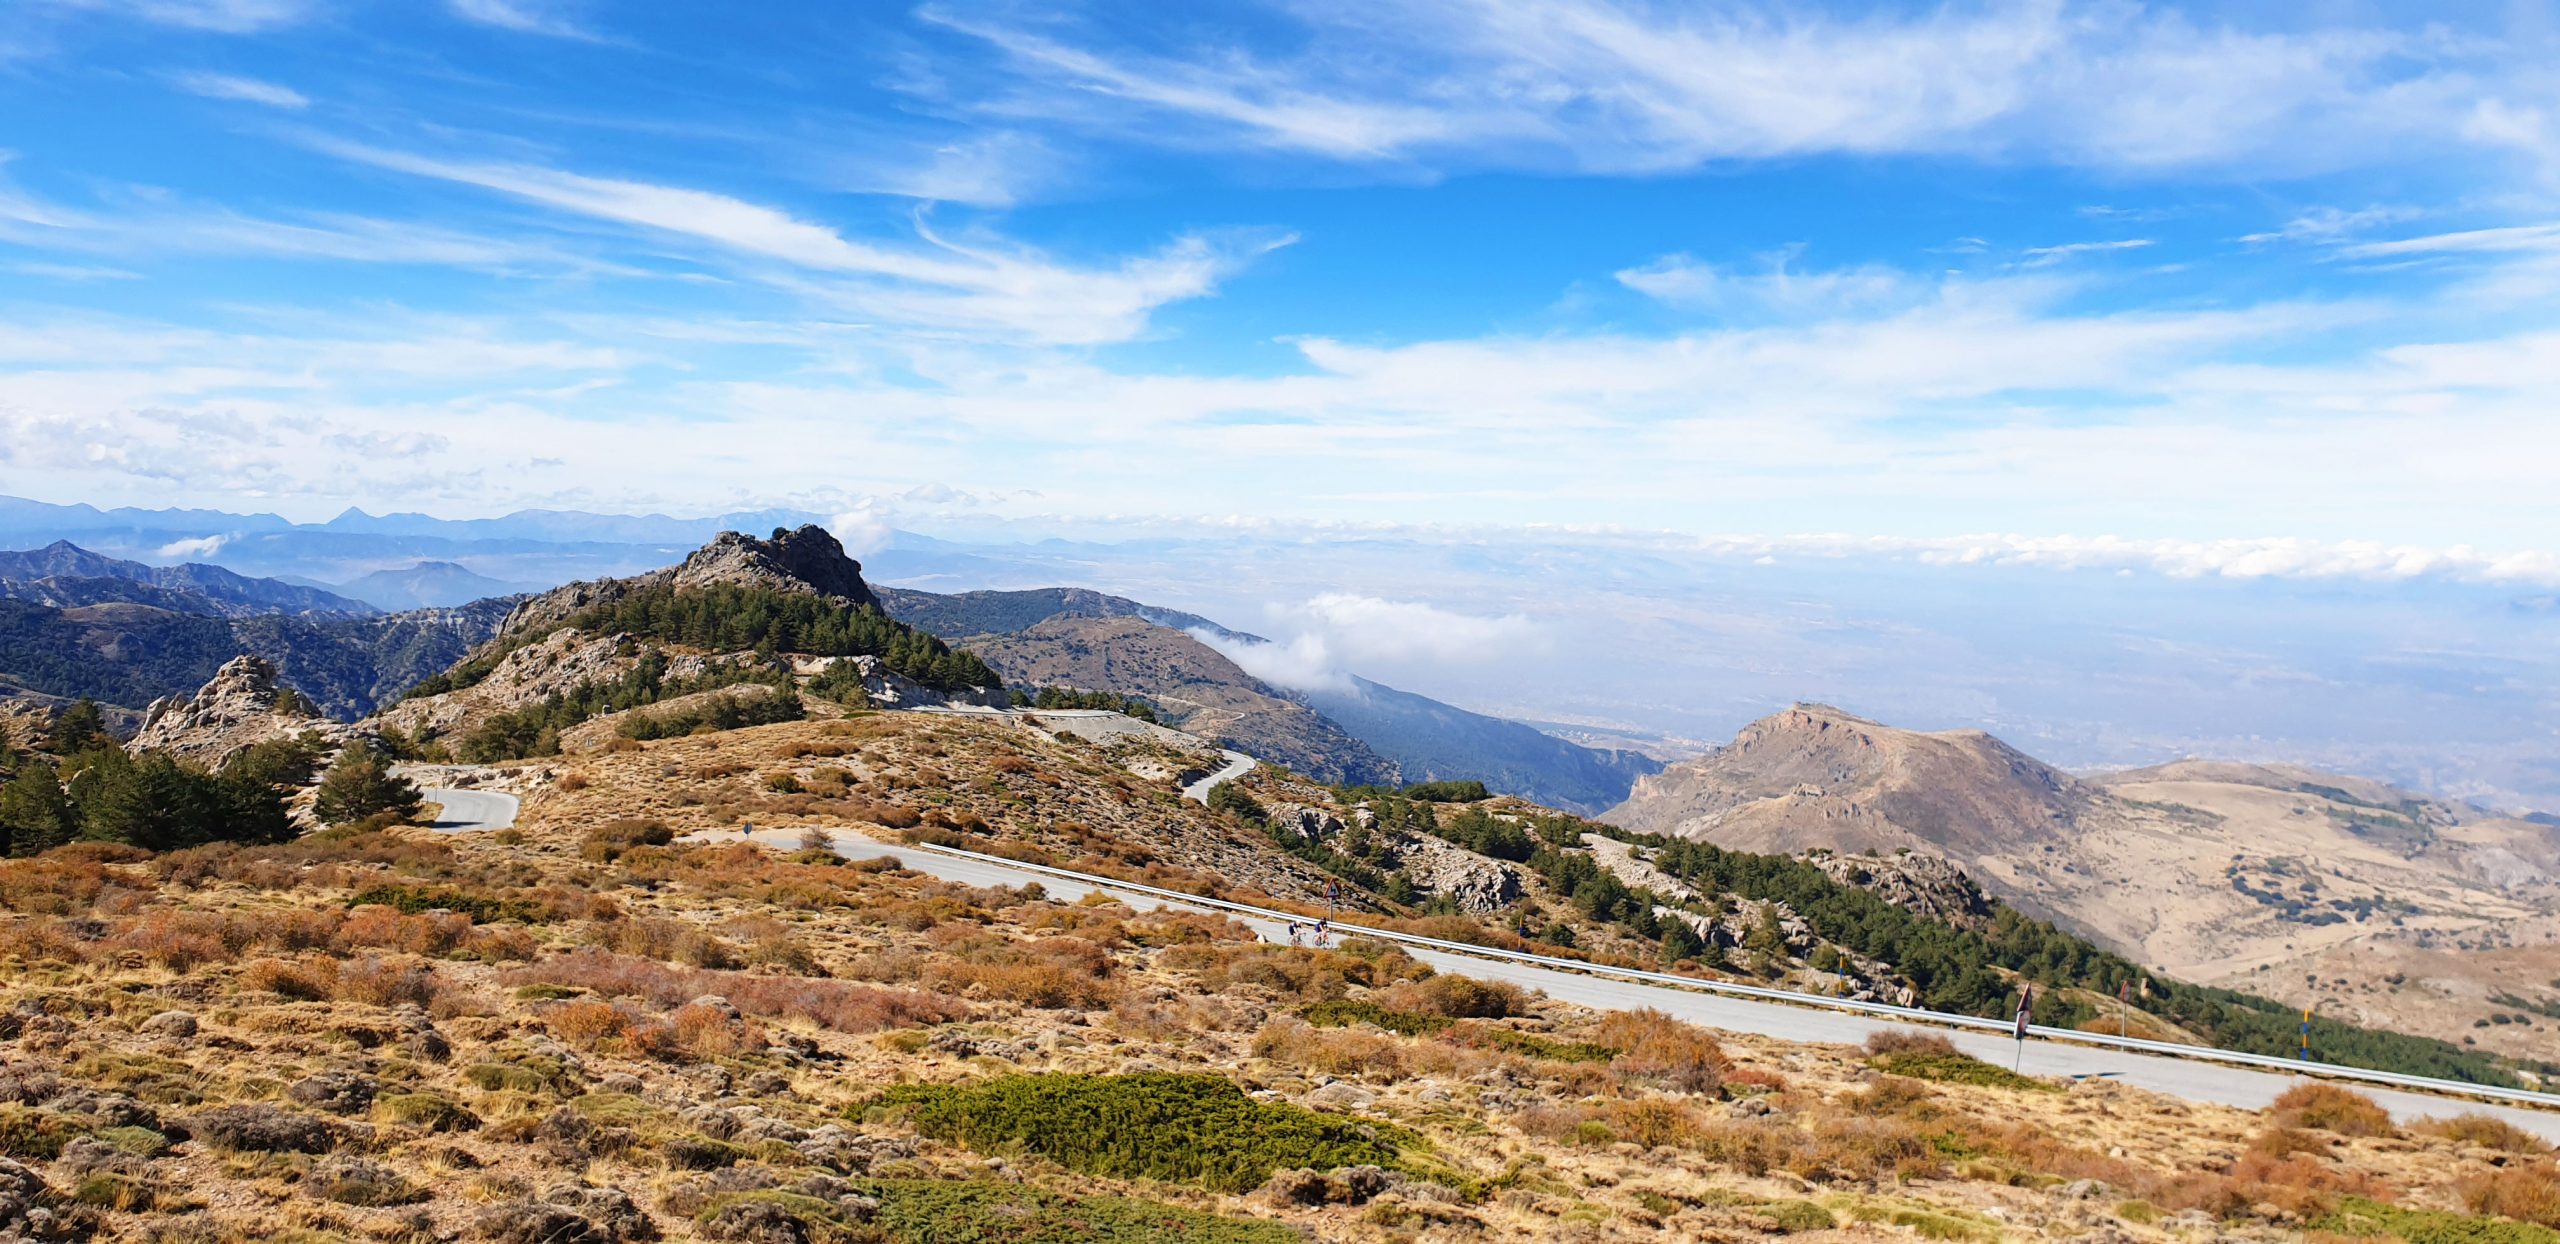 Road Cycling in the Sierra Nevada to Pico Veleta